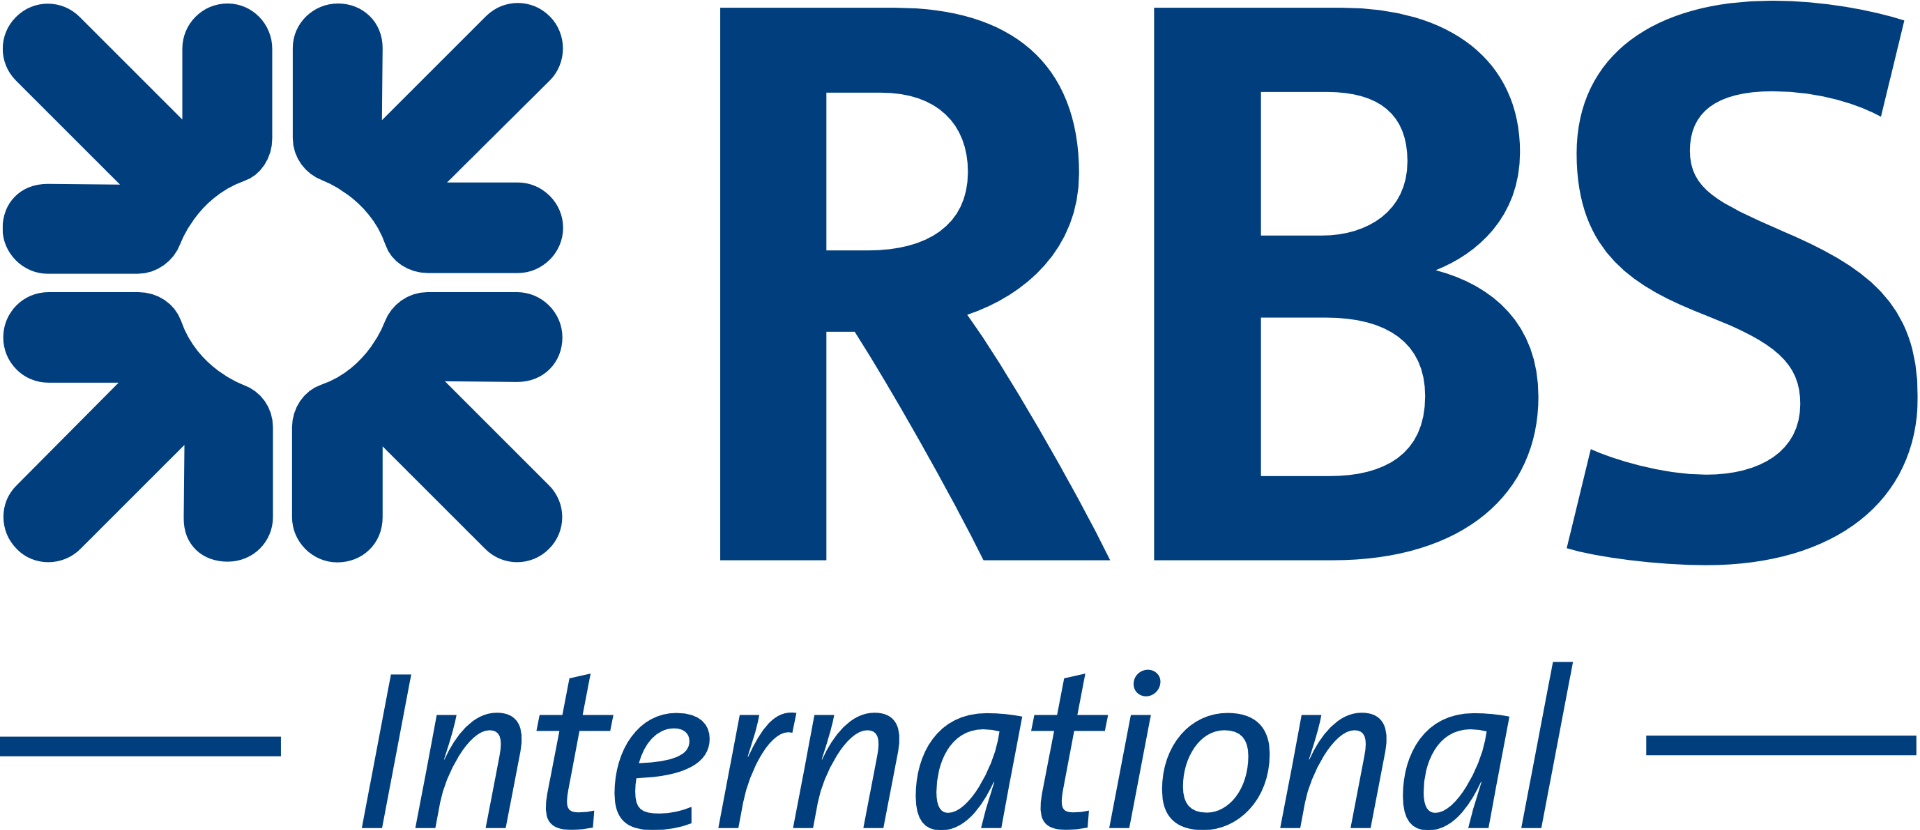 RBS International